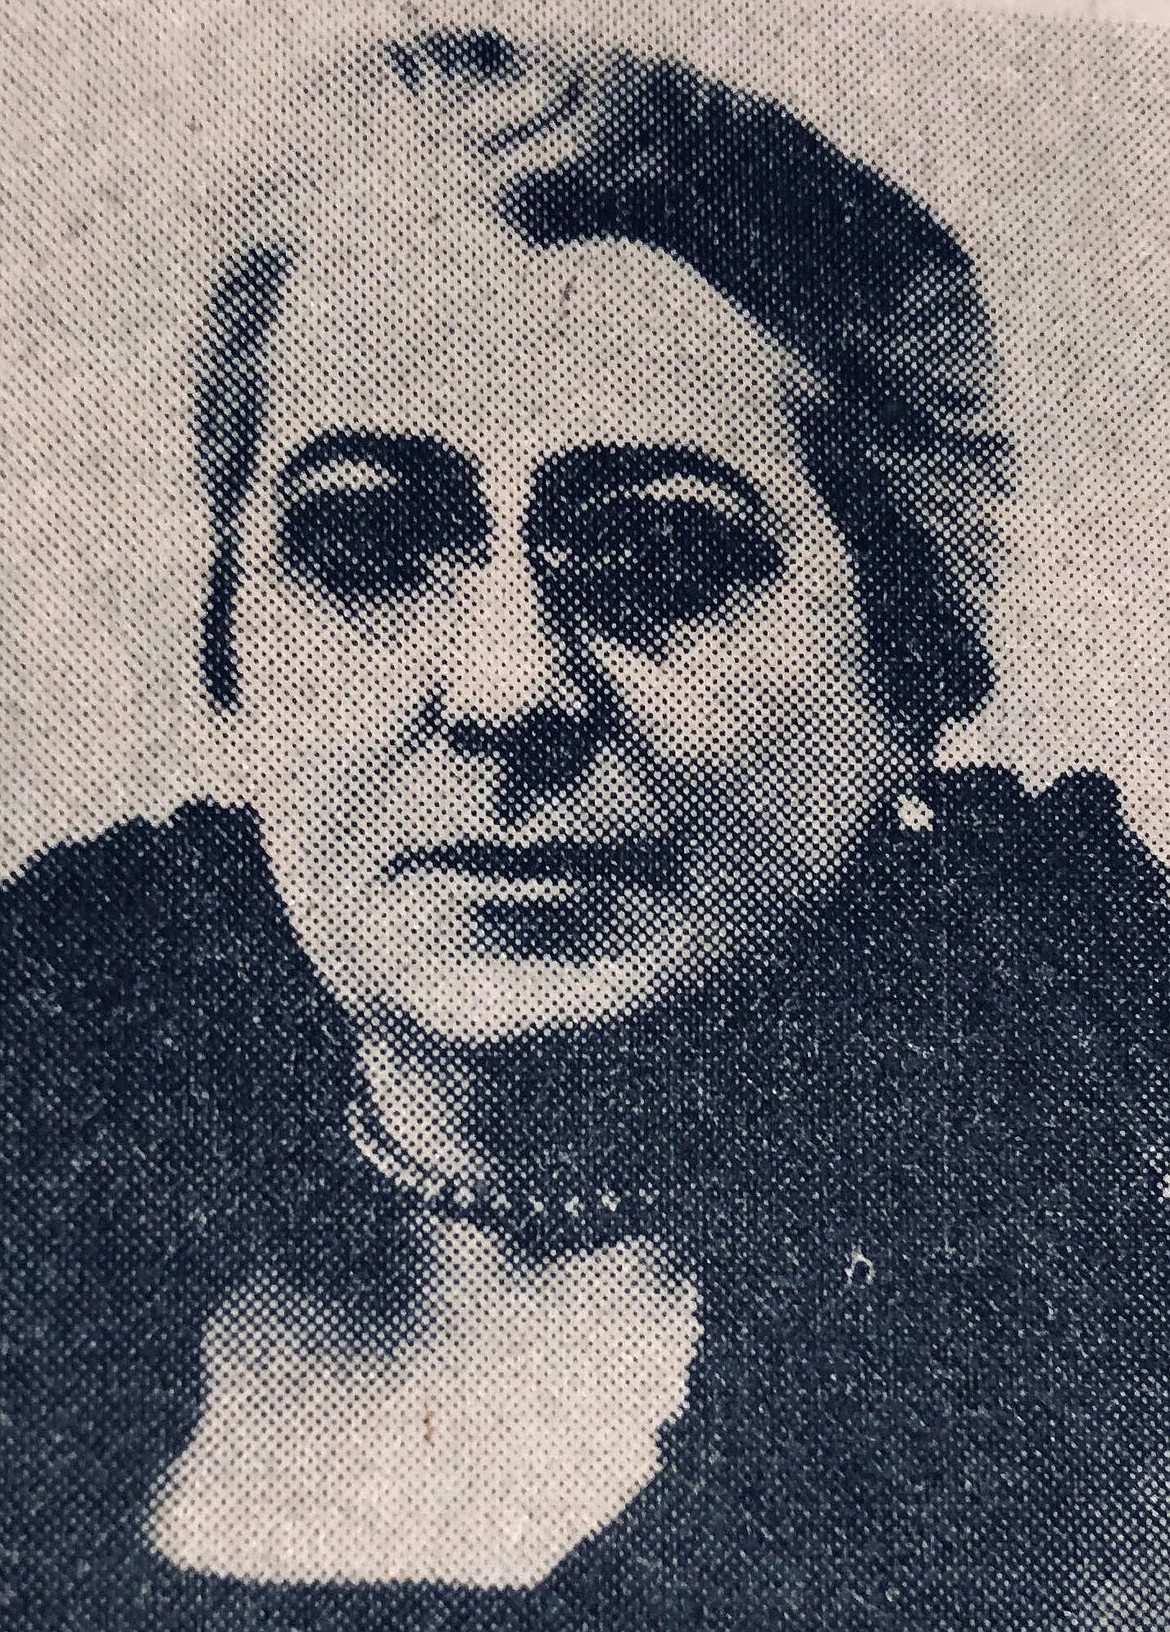 A 1951 Coeur d’Alene Press photo of Teresa Graham.